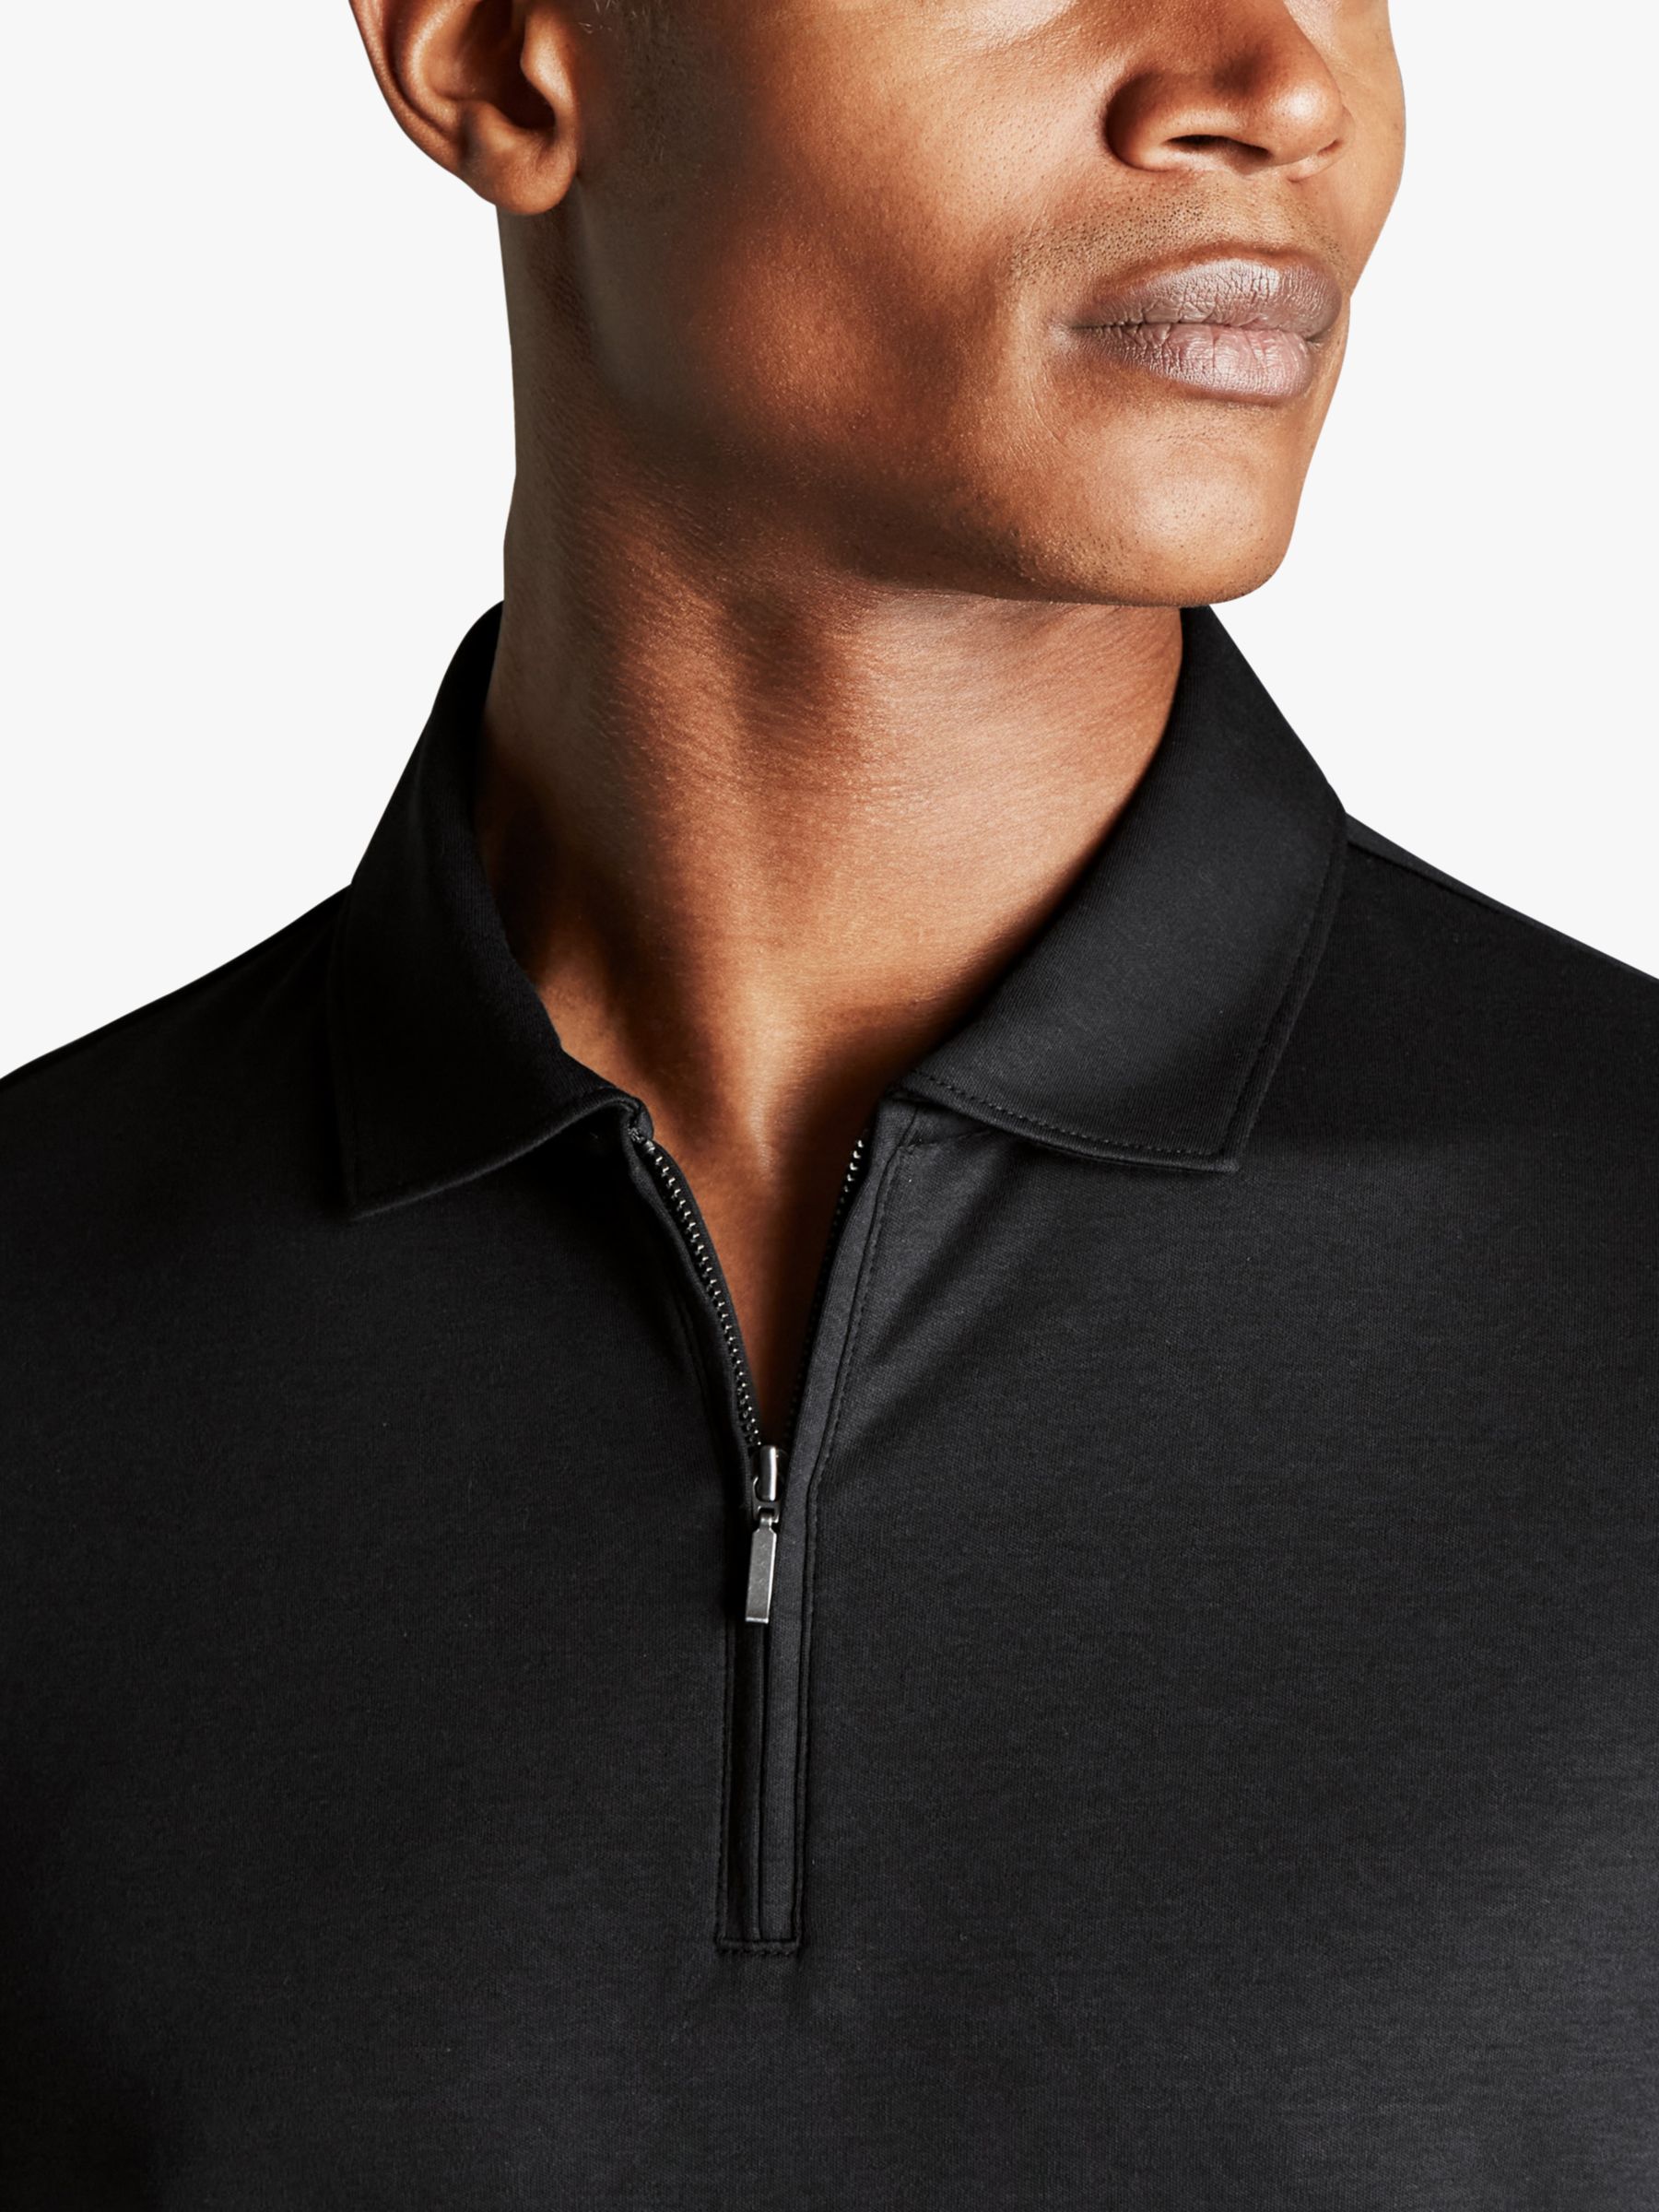 Charles Tyrwhitt Zip Neck Jersey Polo Shirt, Black at John Lewis & Partners